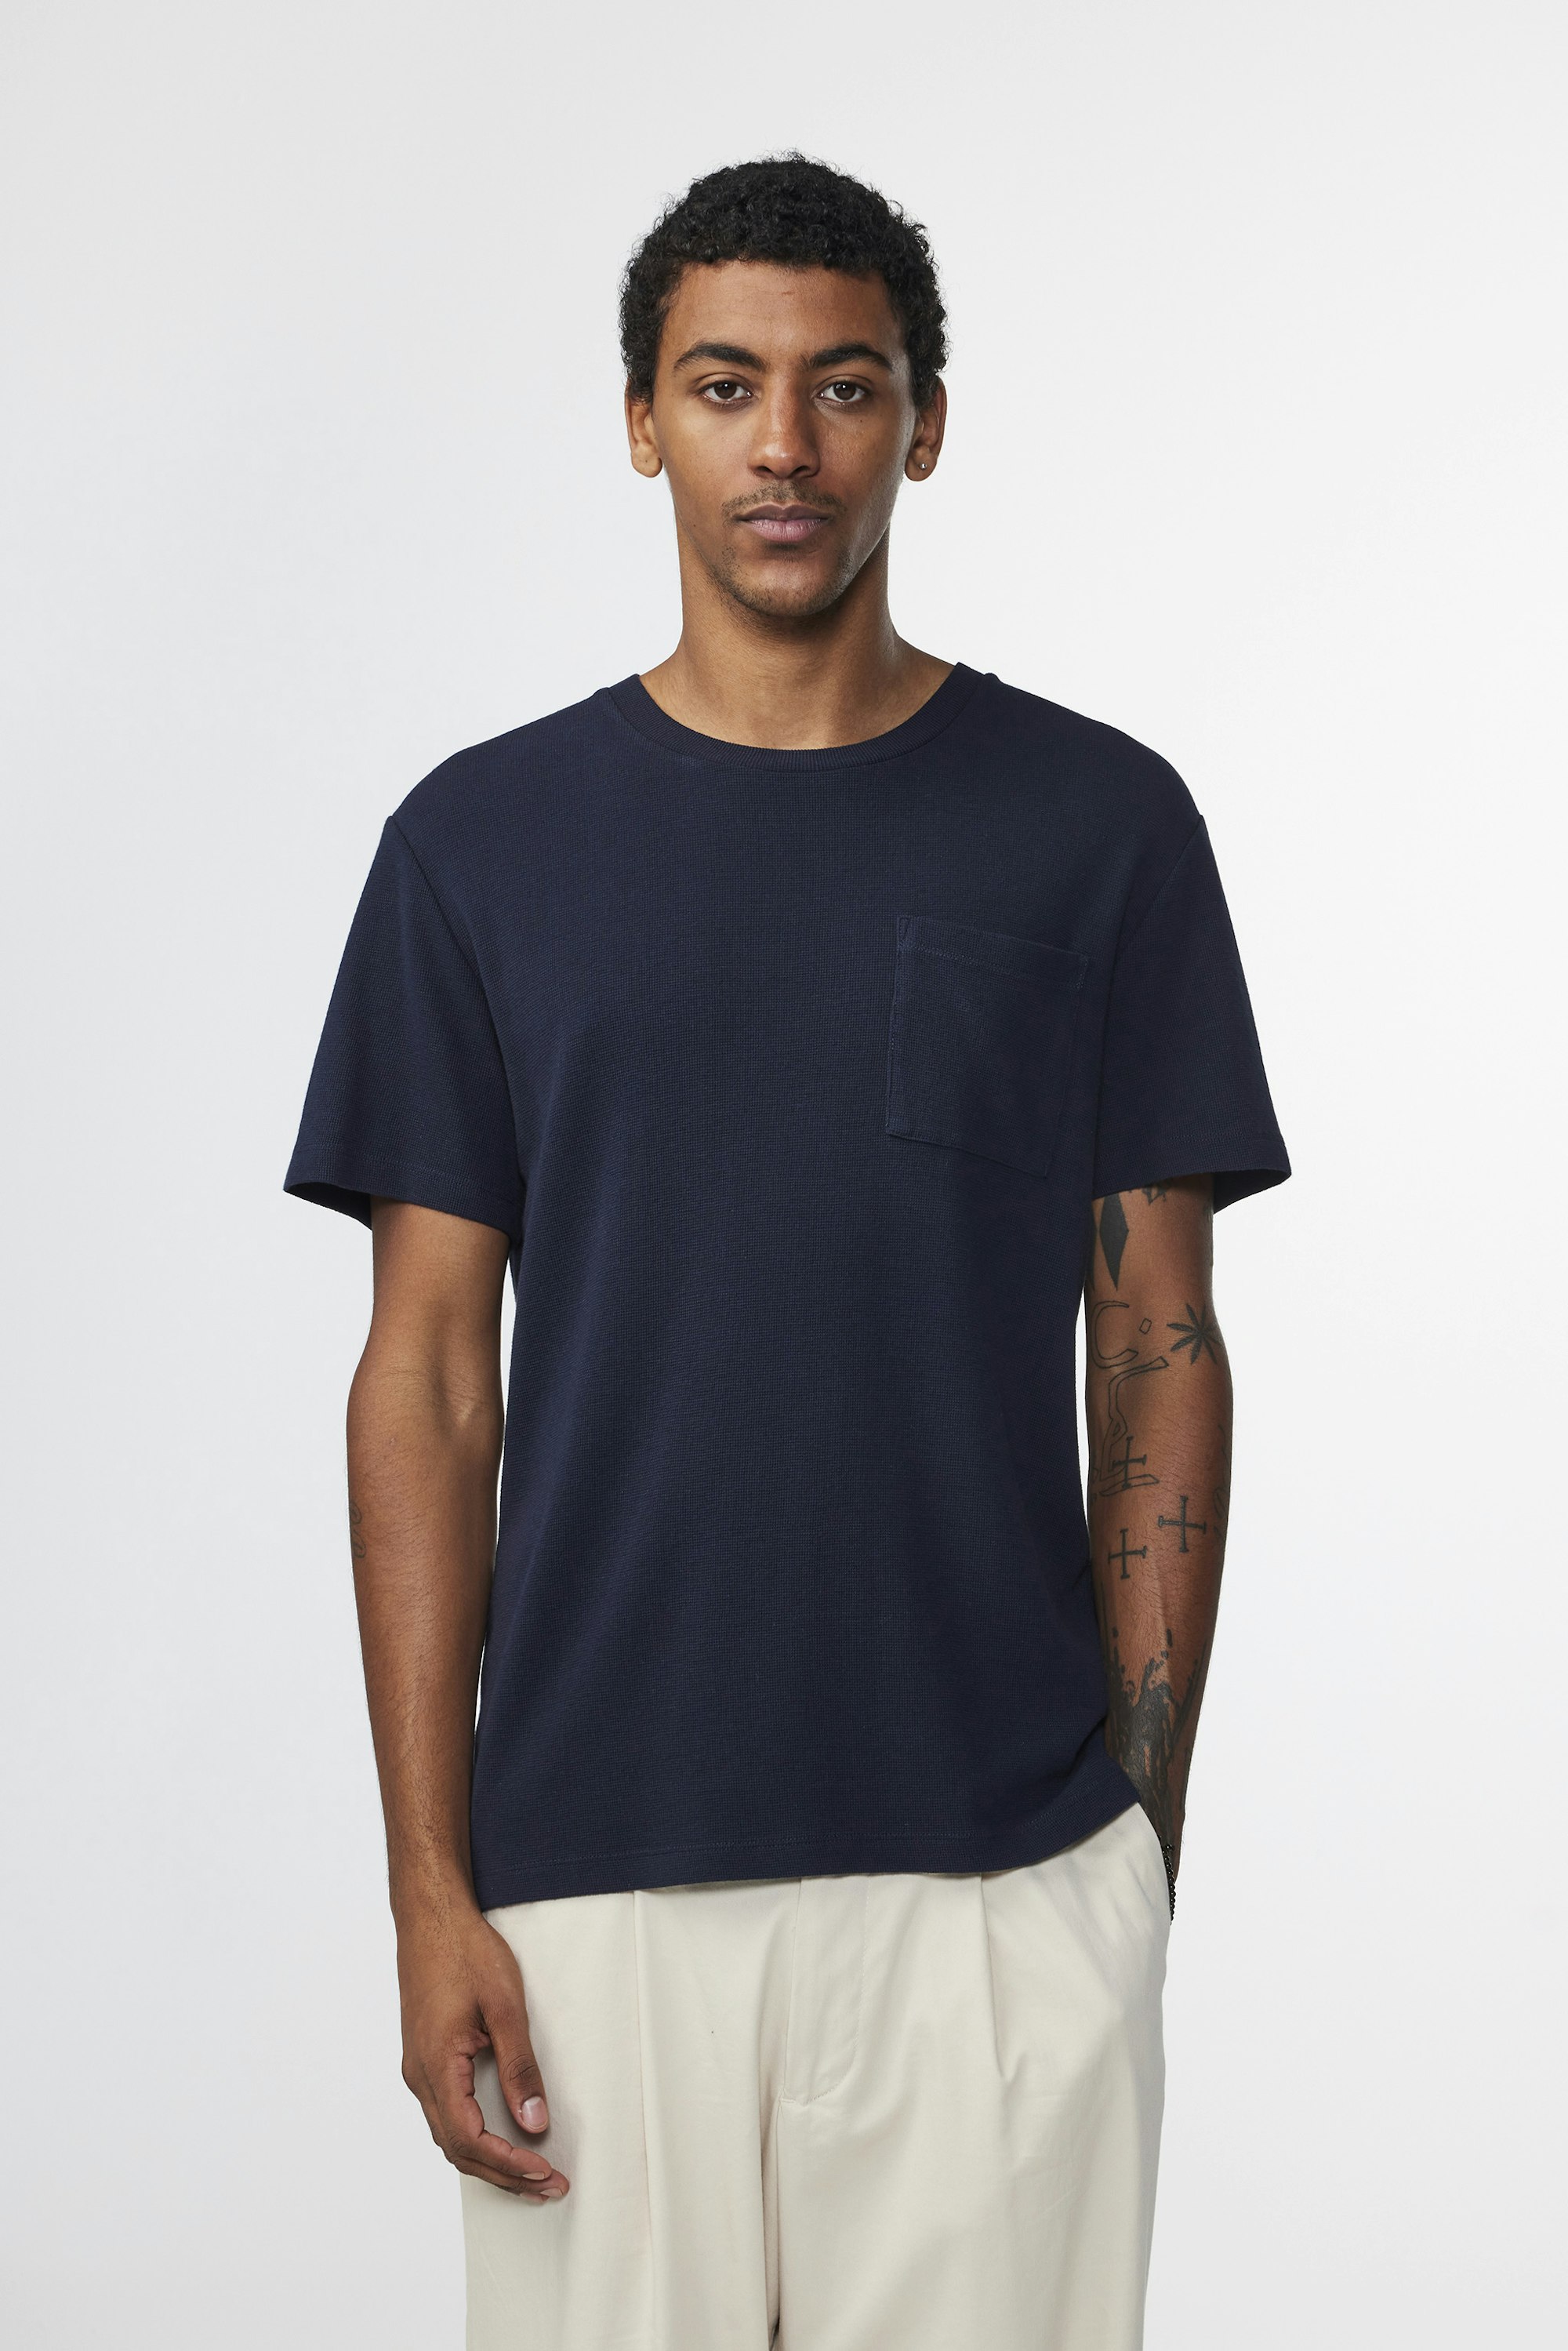 Clive 3323 men's t-shirt - Blue - Buy online at